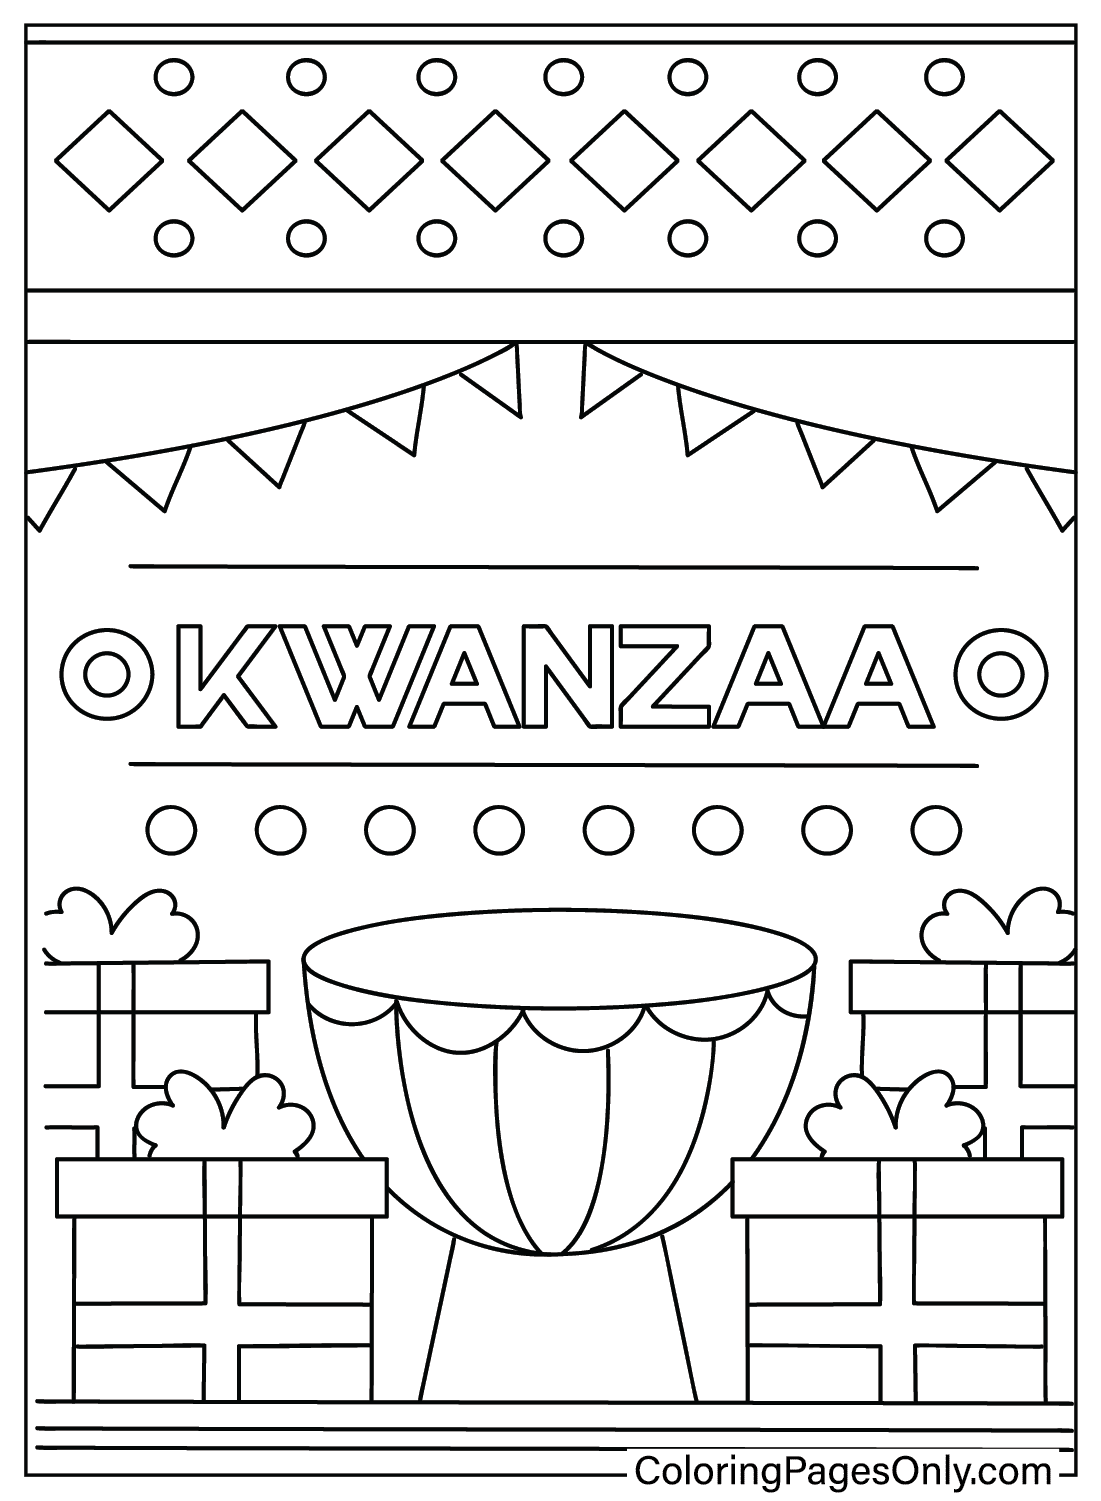 Kwanzaa kleurenpagina van Kwanzaa